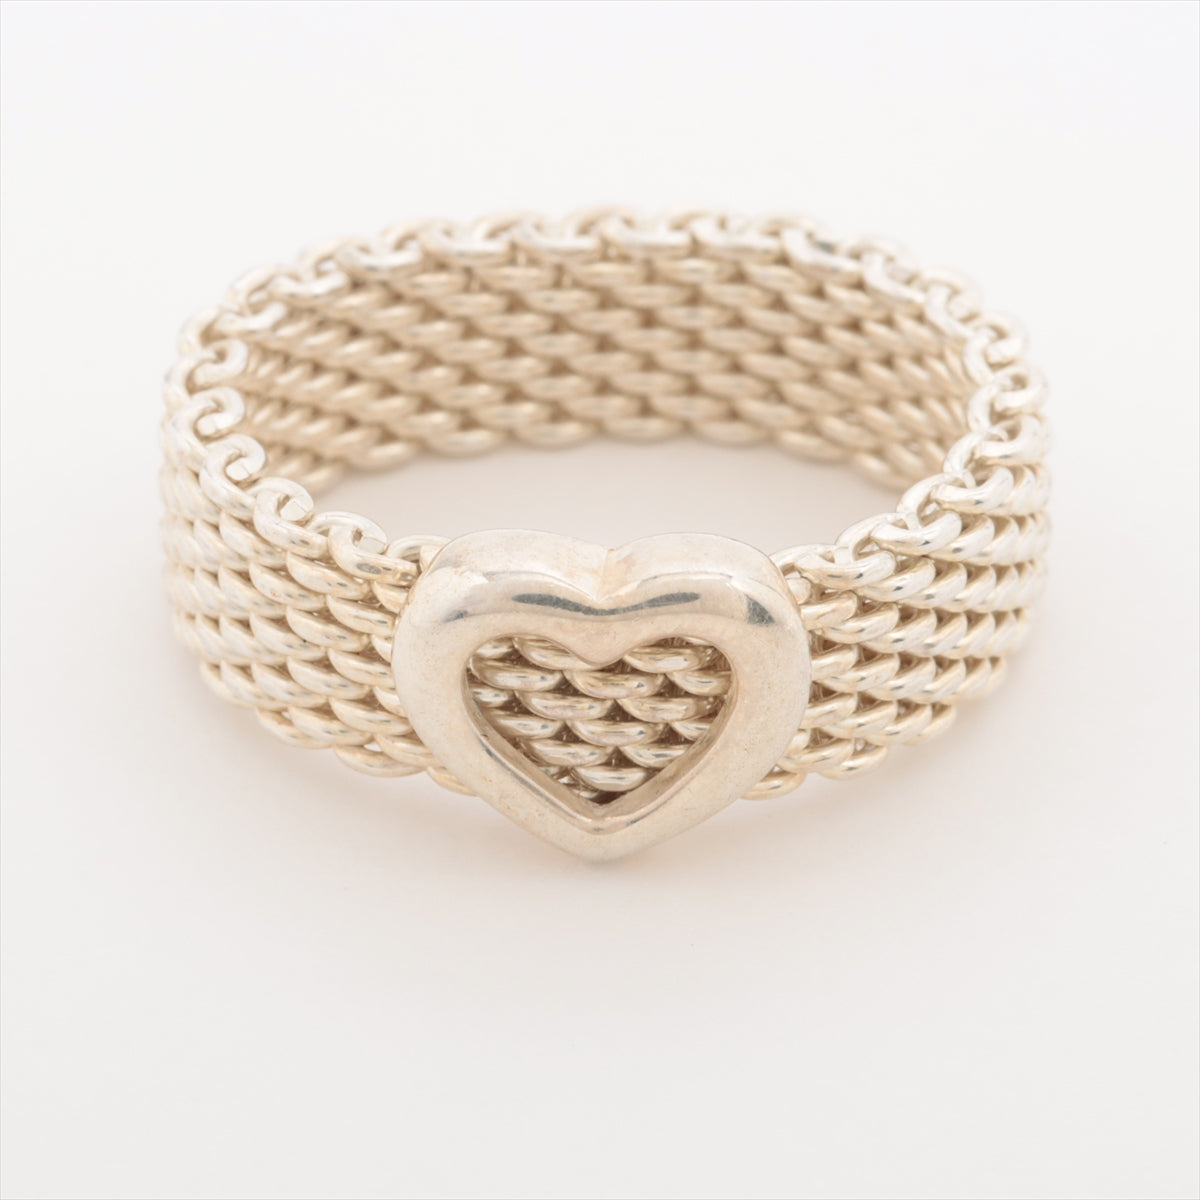 Tiffany Somerset hearts rings 925 4.8g Silver